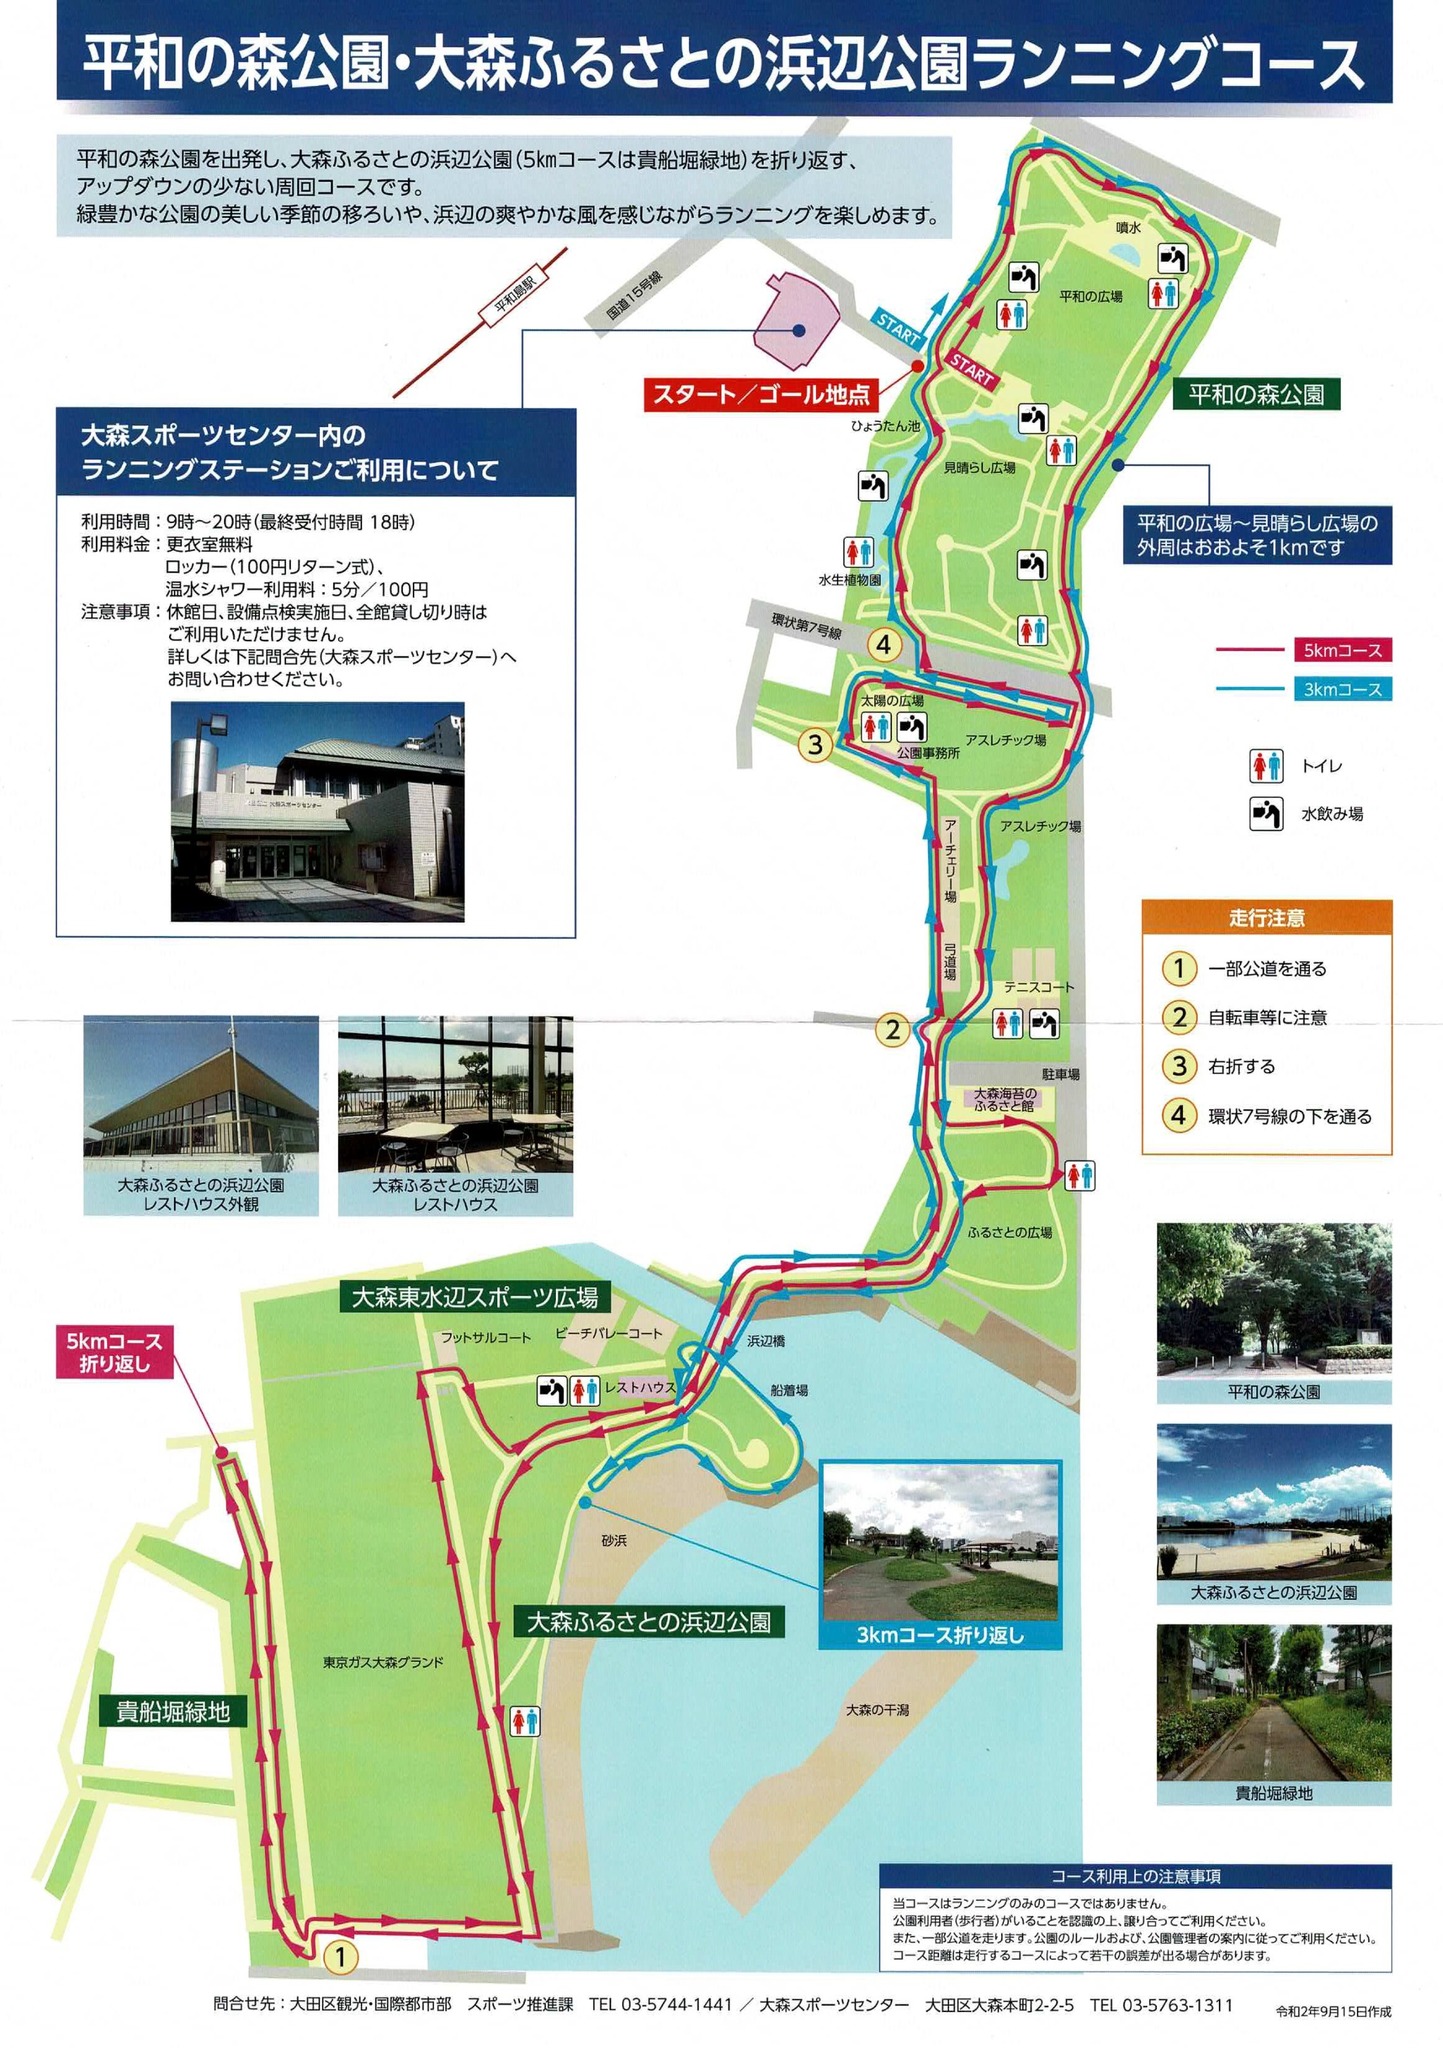 Home Sweet Office Heiwajima|羽田空港まで電車12分|平和島駅まで徒歩5分